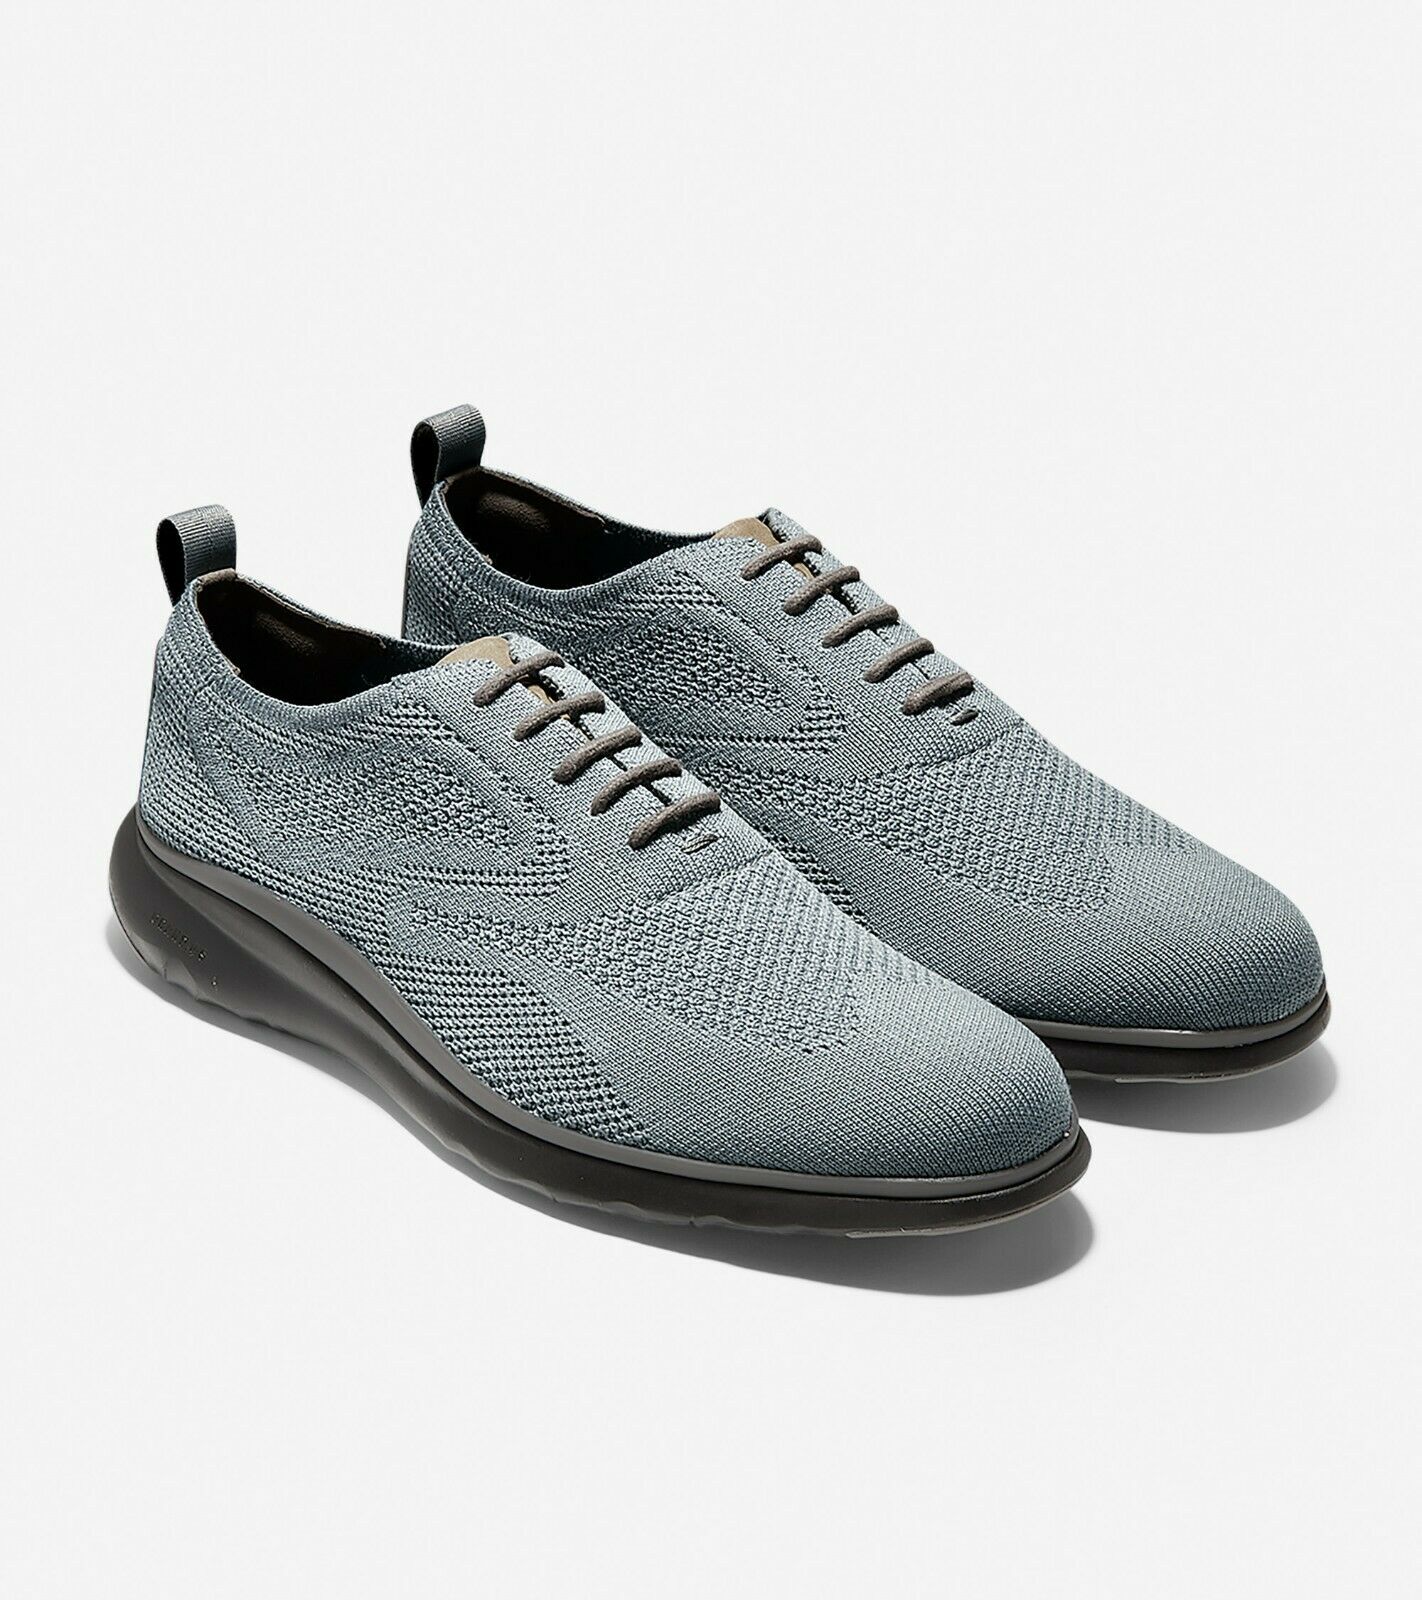 Cole Haan Men's 3.Zerogrand Gray Stitchlite Wingtip Oxford Shoes 11.5M NIB